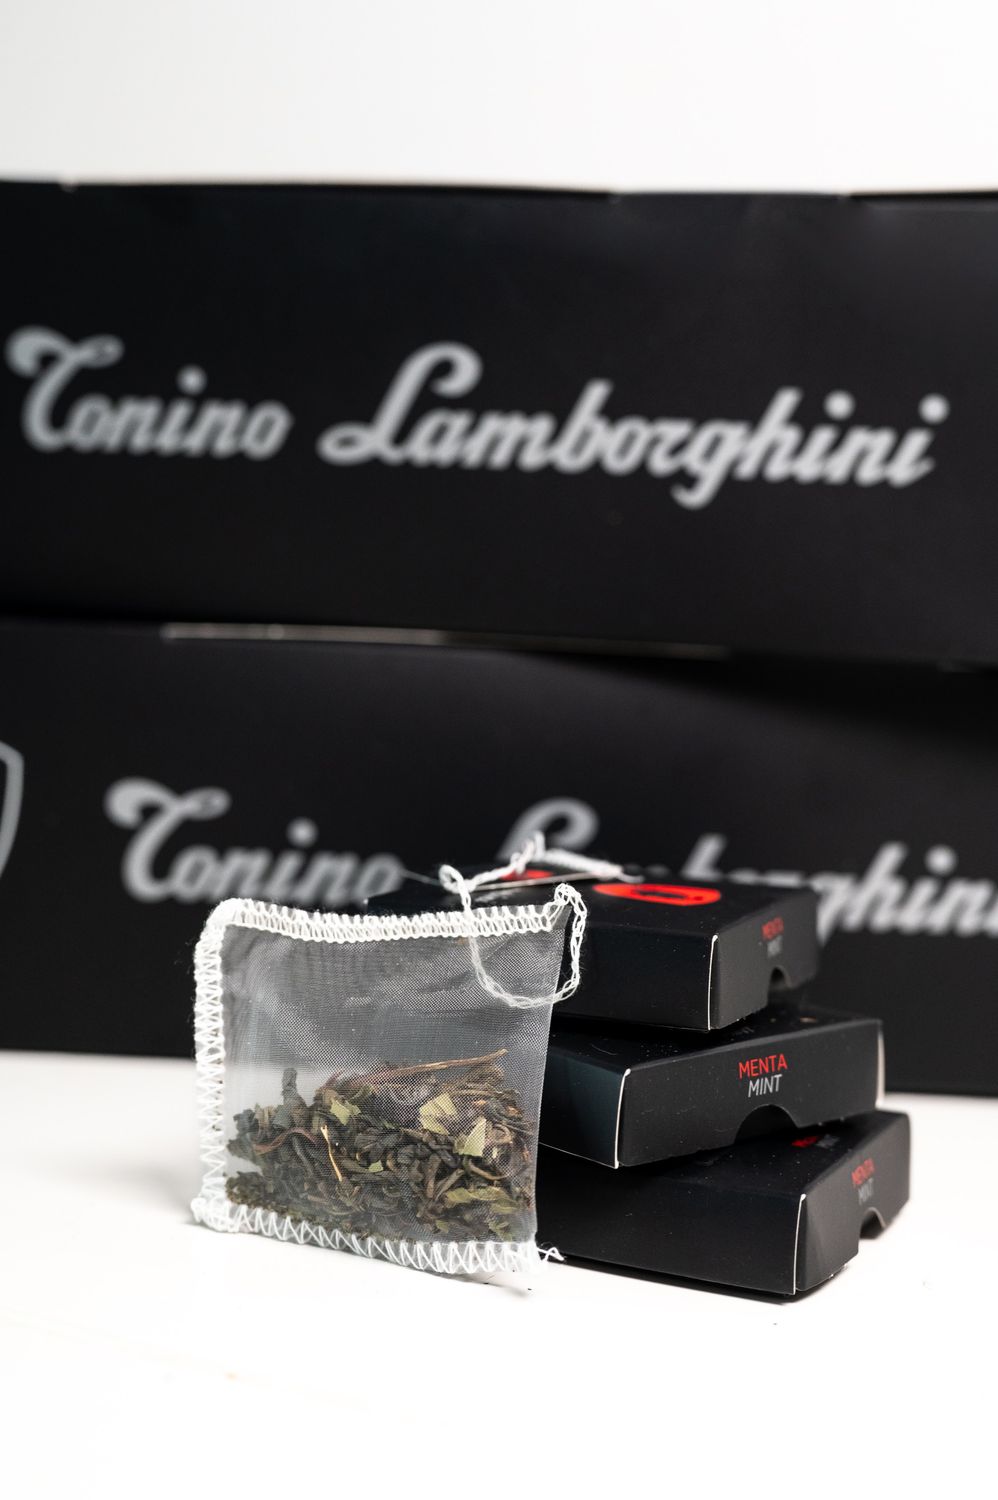 Arbata Tonino Lamborghini &quot;Black tea Earl Grey Imperial&quot;